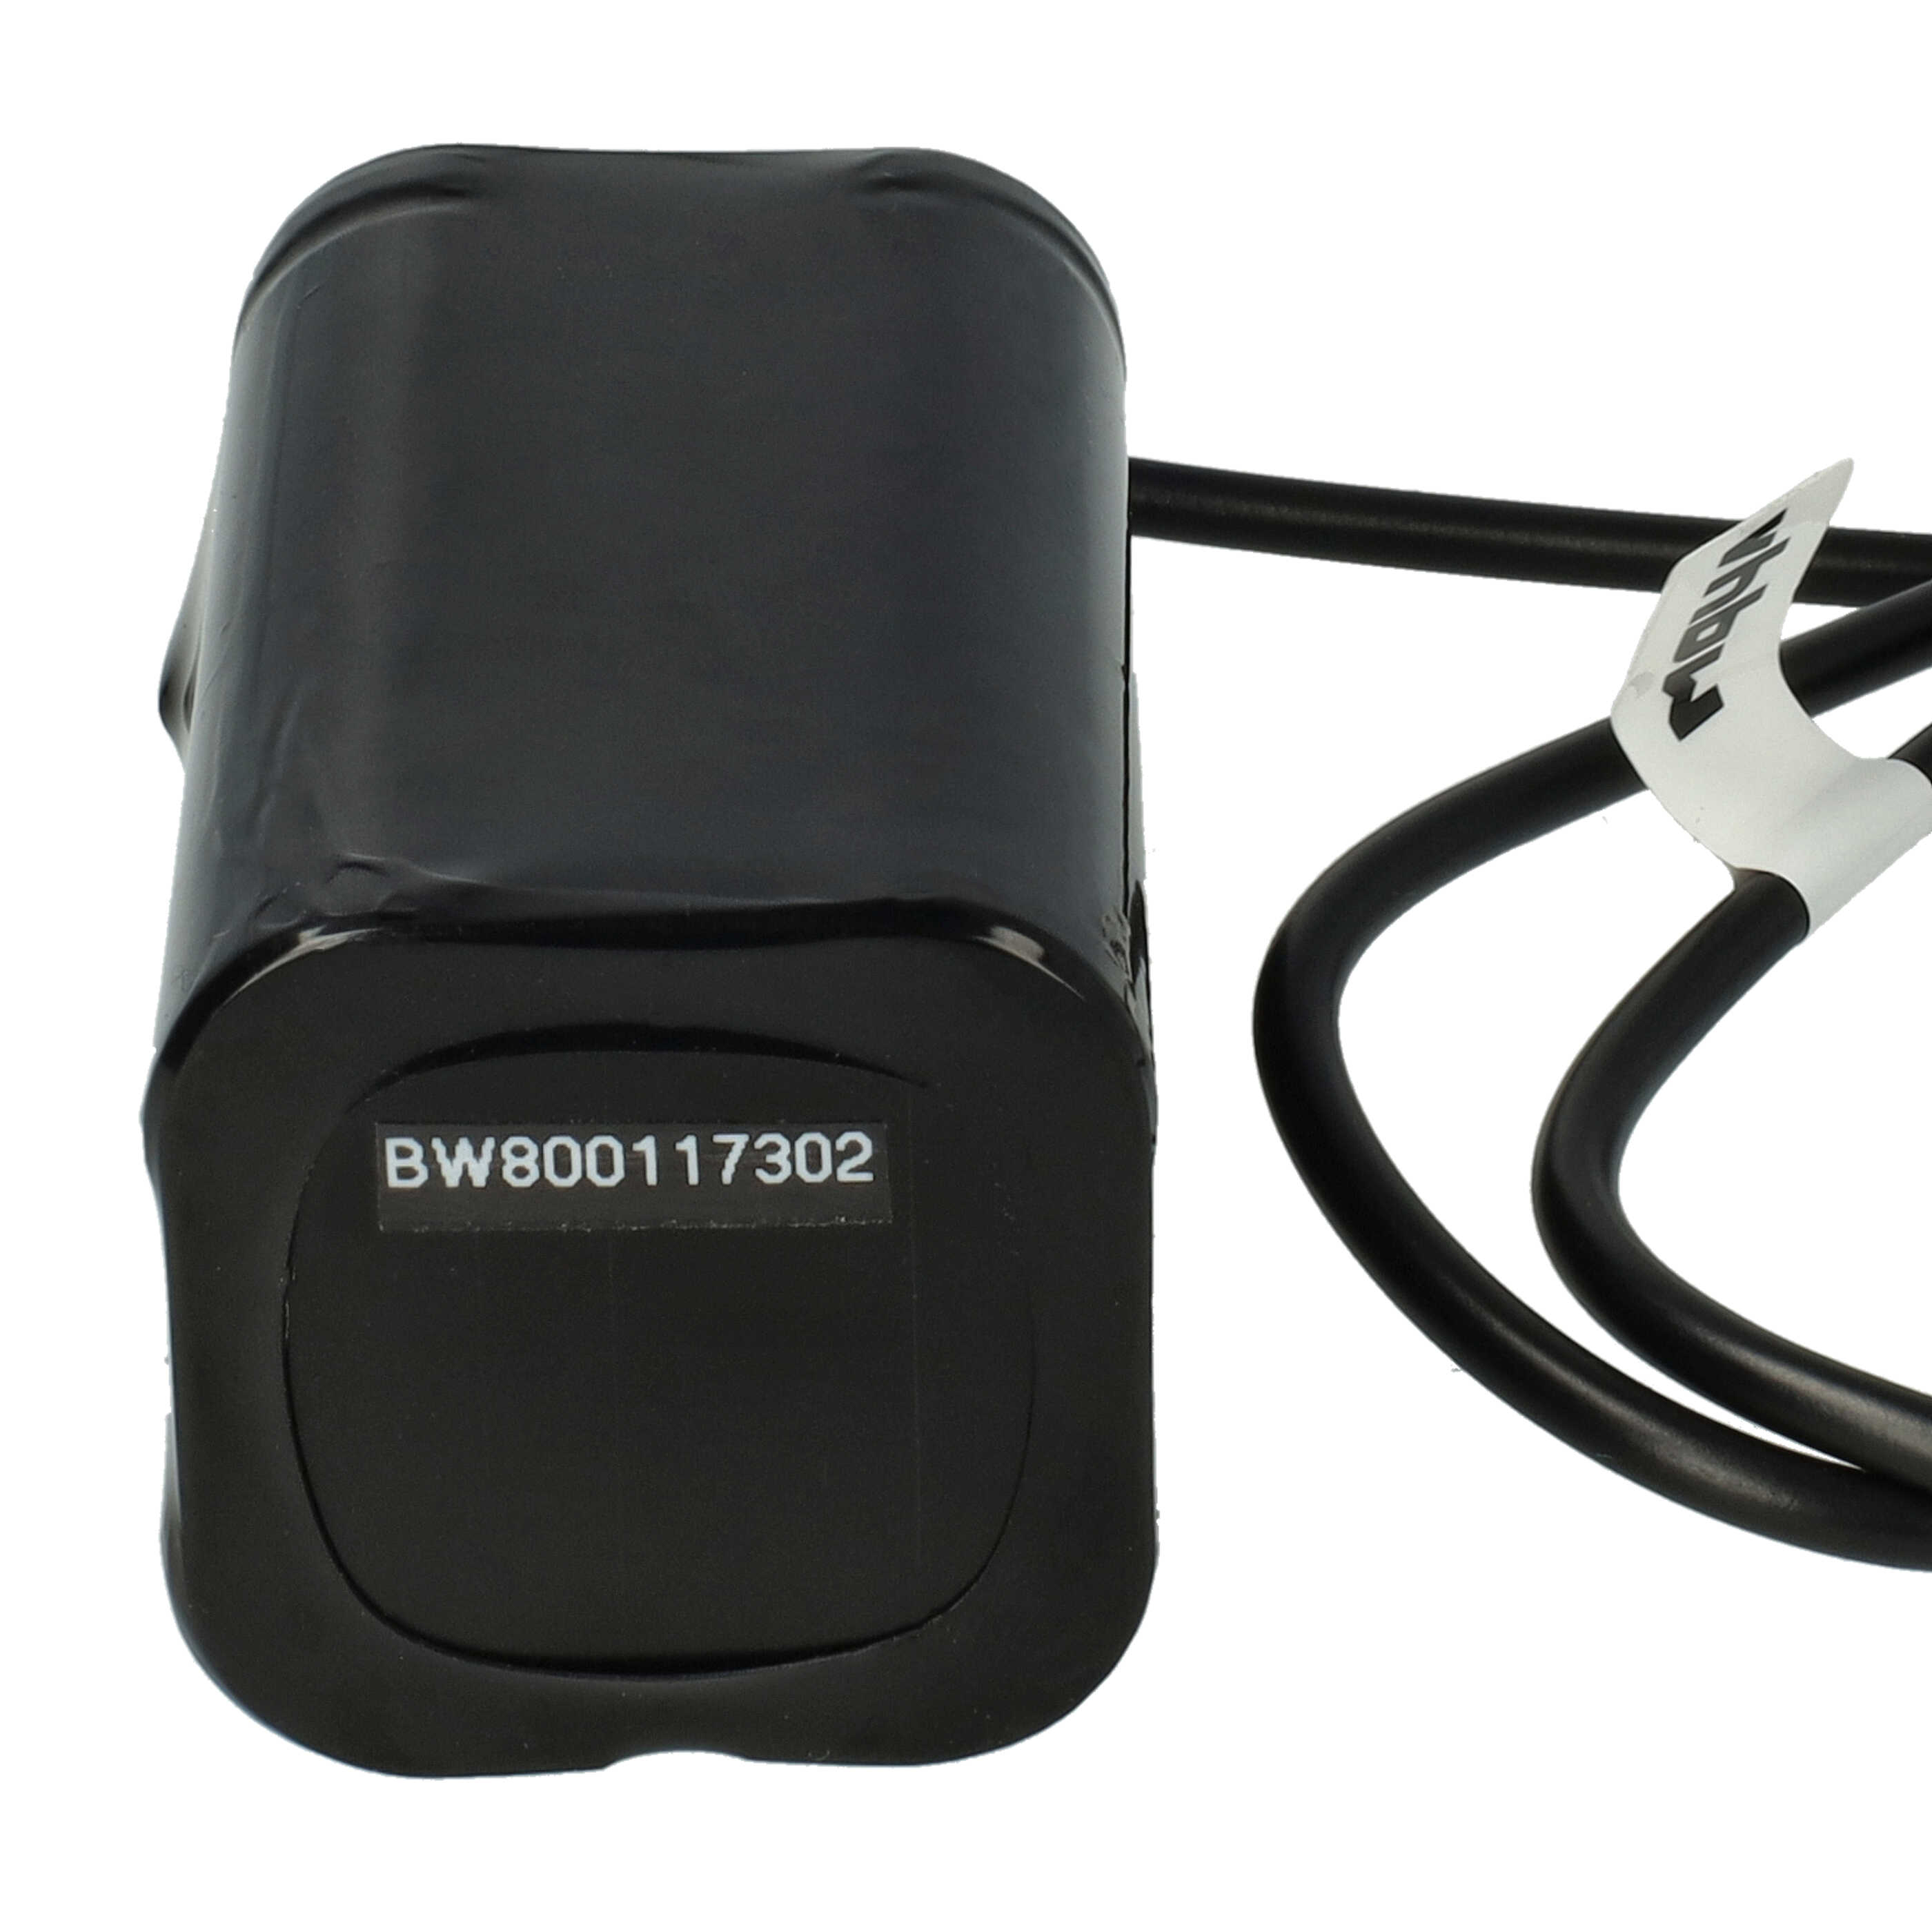 Li-Ion-battery pack- 6000mAh 8.4V - for bicycle lamp light